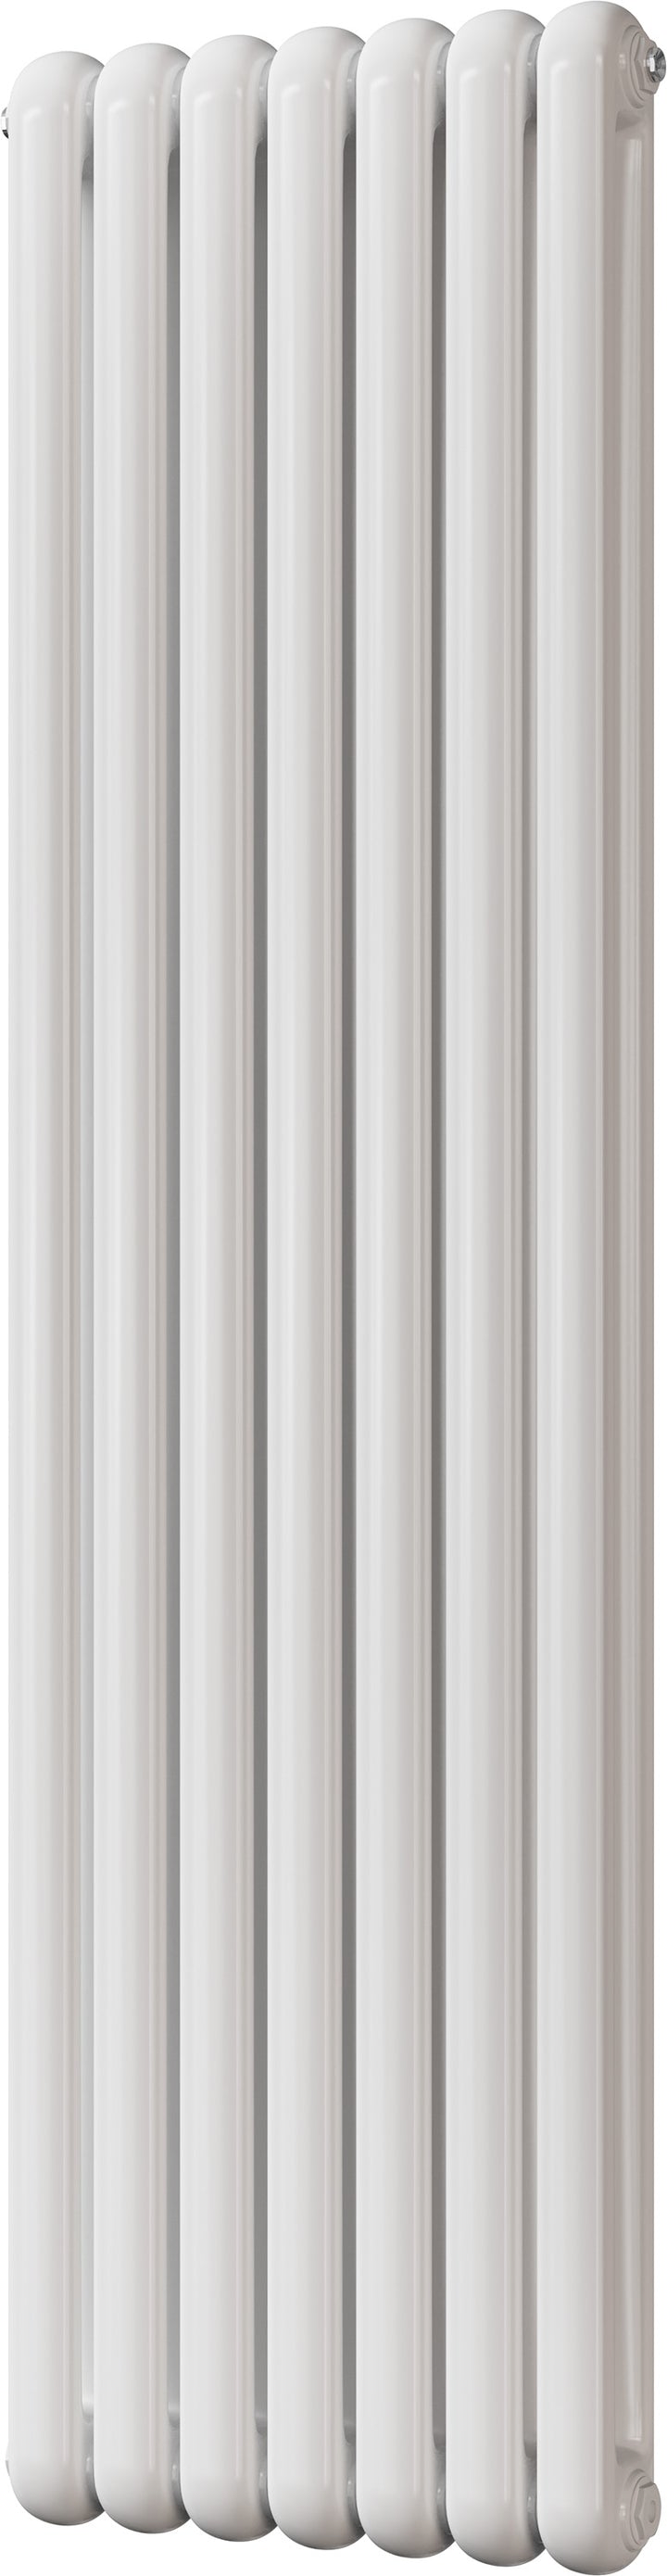 Sherwood - White Vertical Round Top Column Radiator H1800mm x W507mm 2 Column